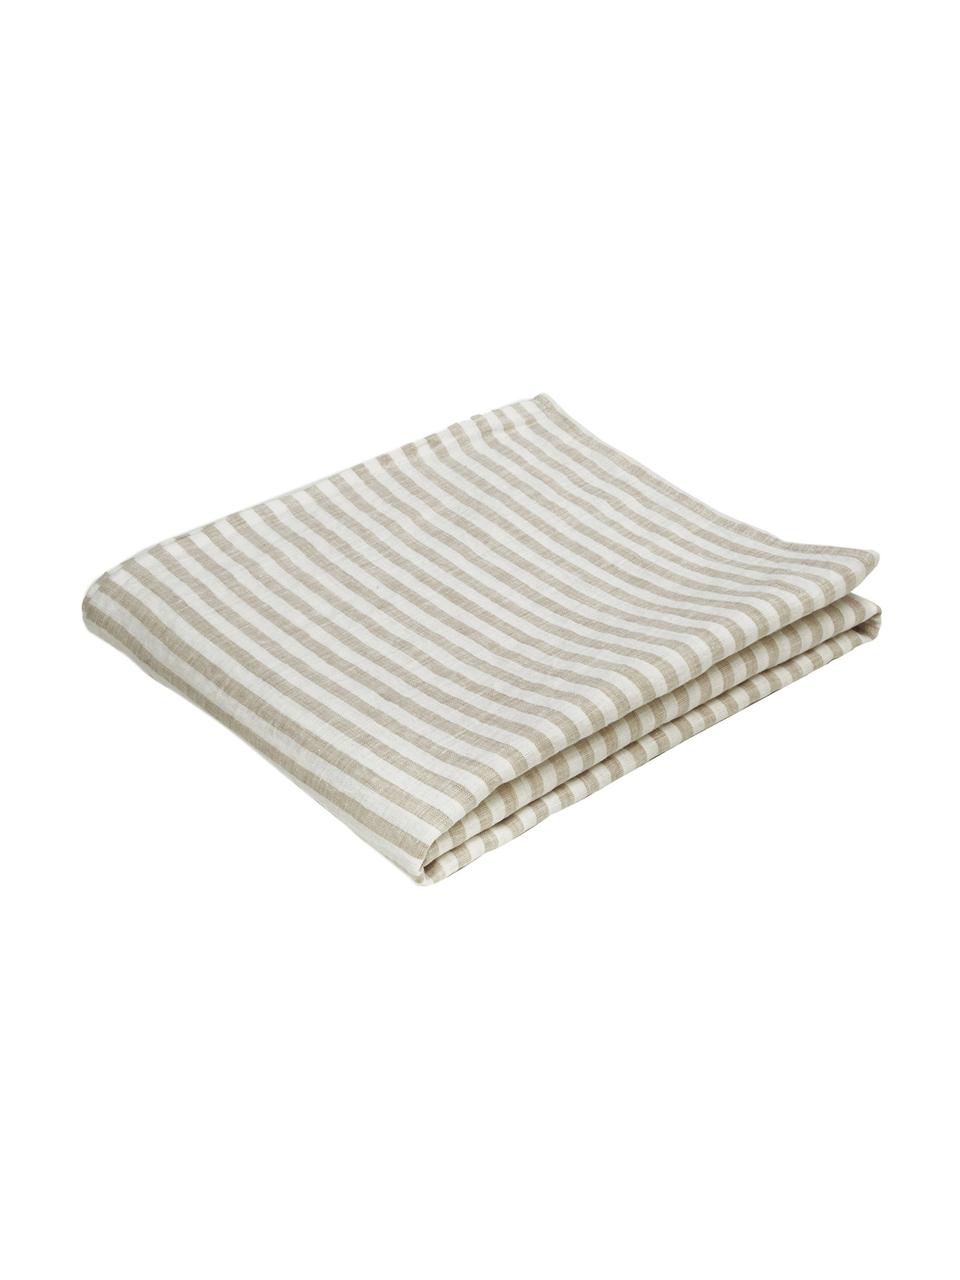 Mantel de lino Solami, Lino, Beige, blanco, De 6 a 8 comensales (An 150 x L 250 cm)